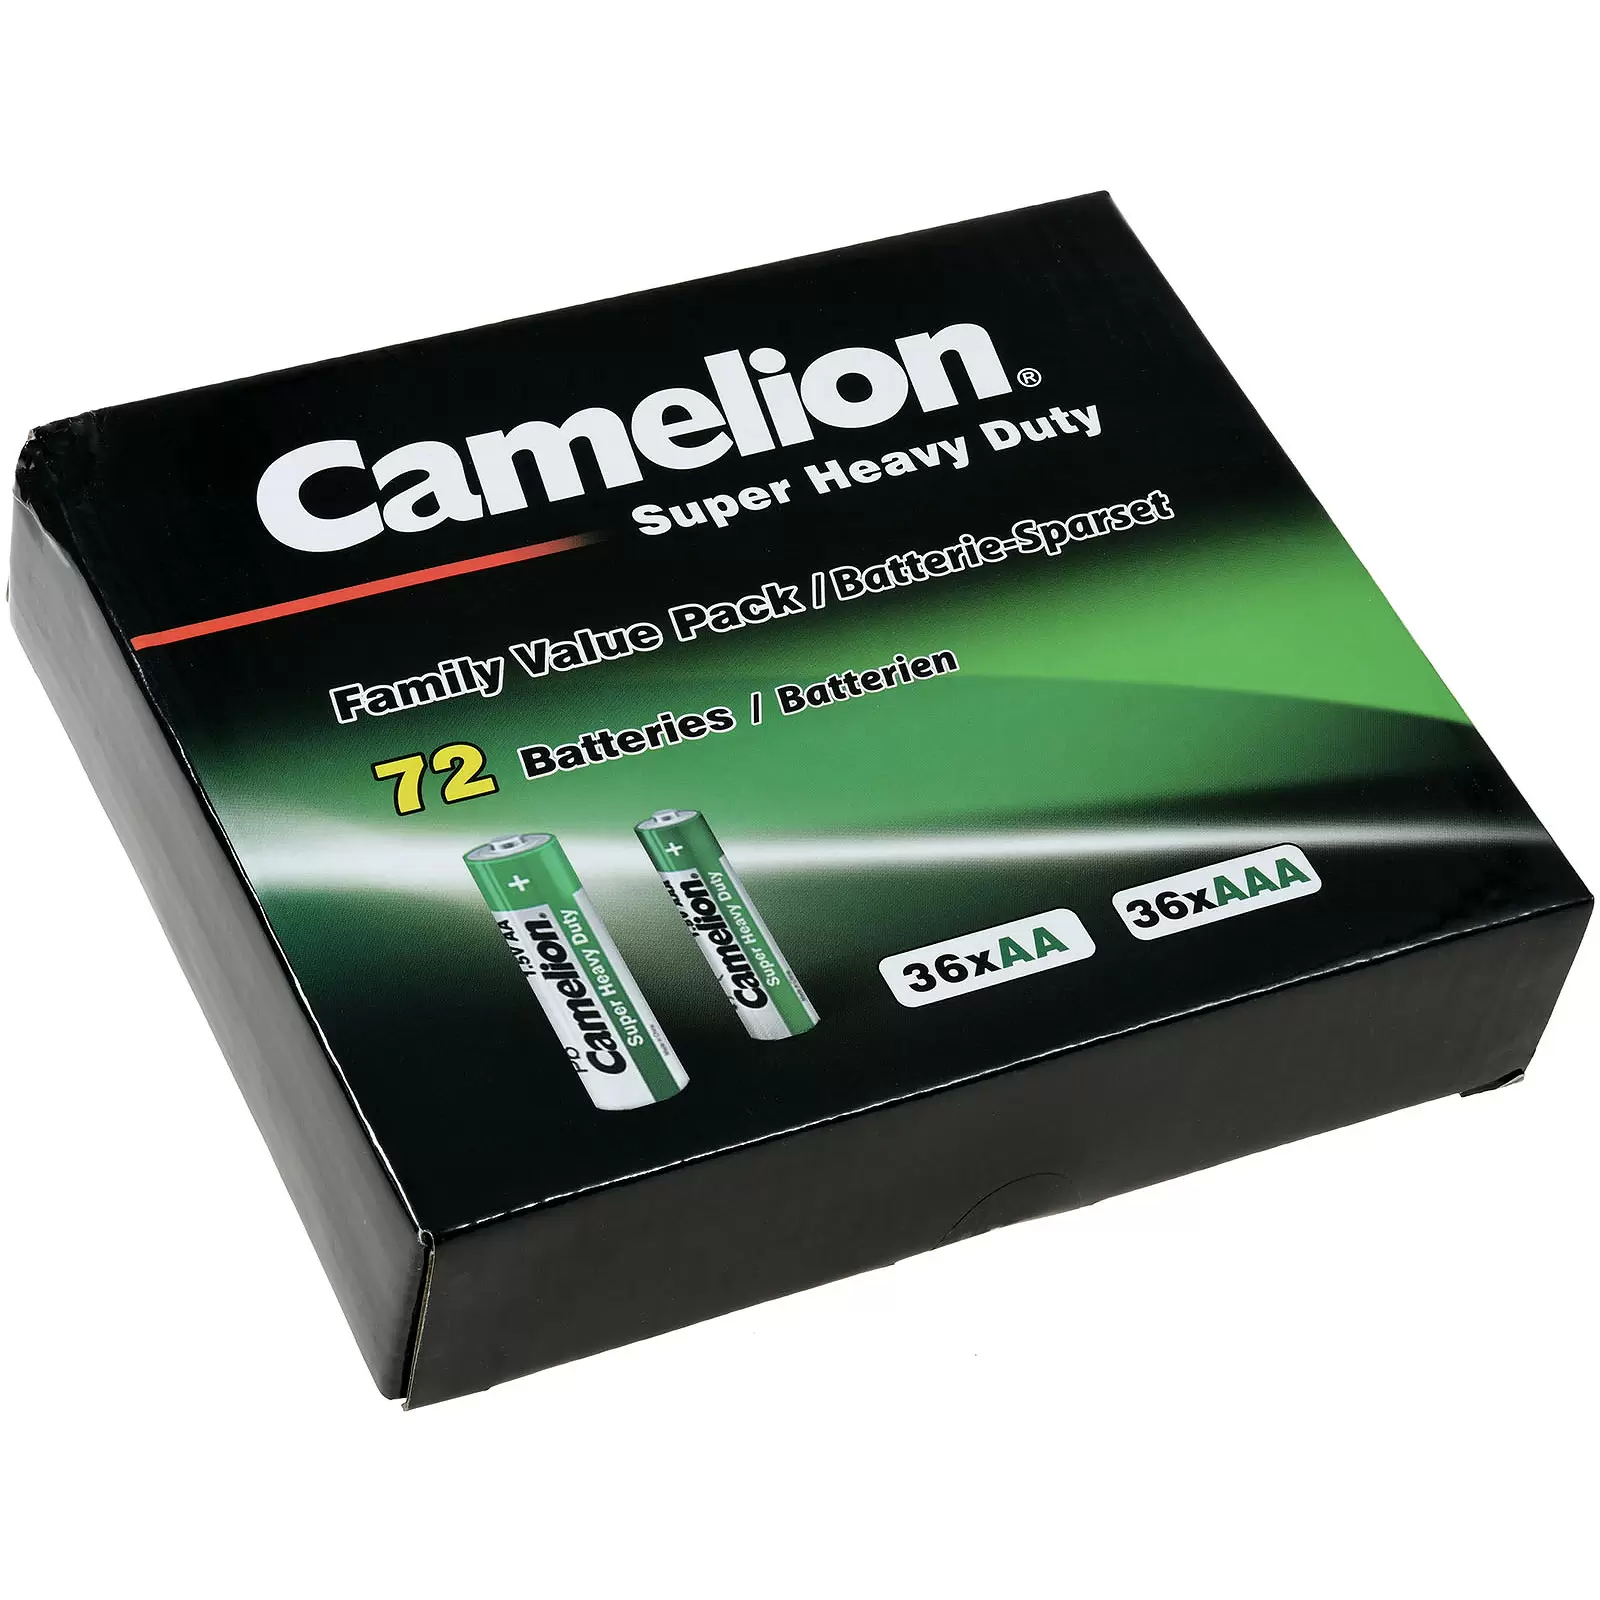 Camelion Batterien Spar-Set - 36x LR6/AA + 36x LR03/AAA